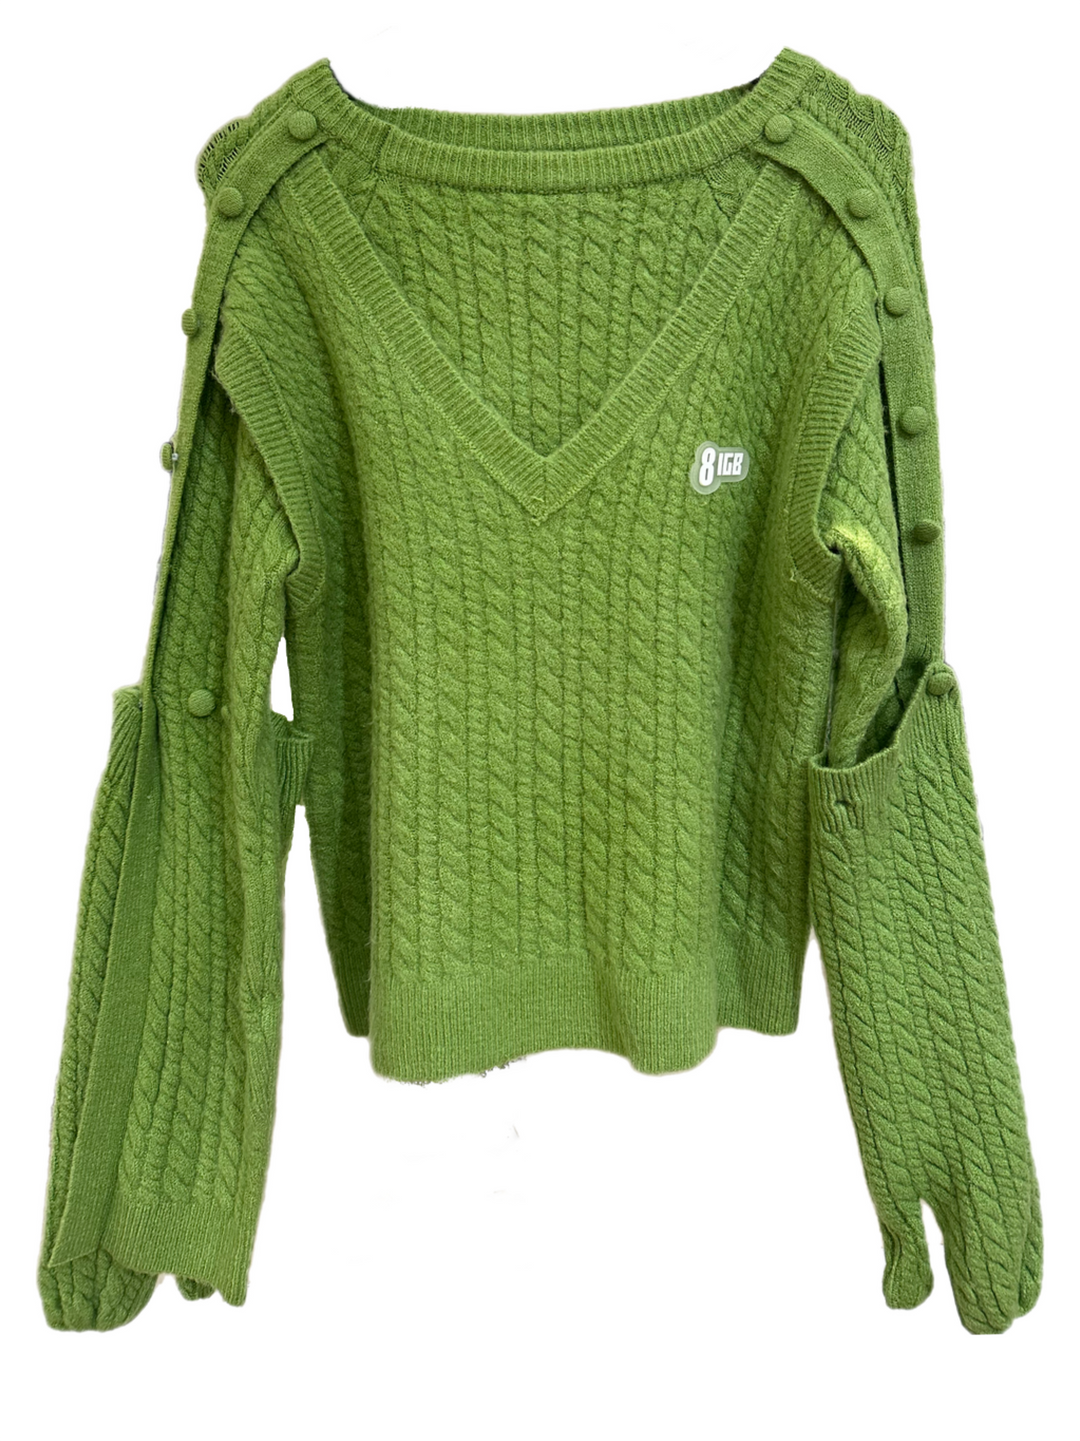 3NY - 8ibg Cabel knit sweater